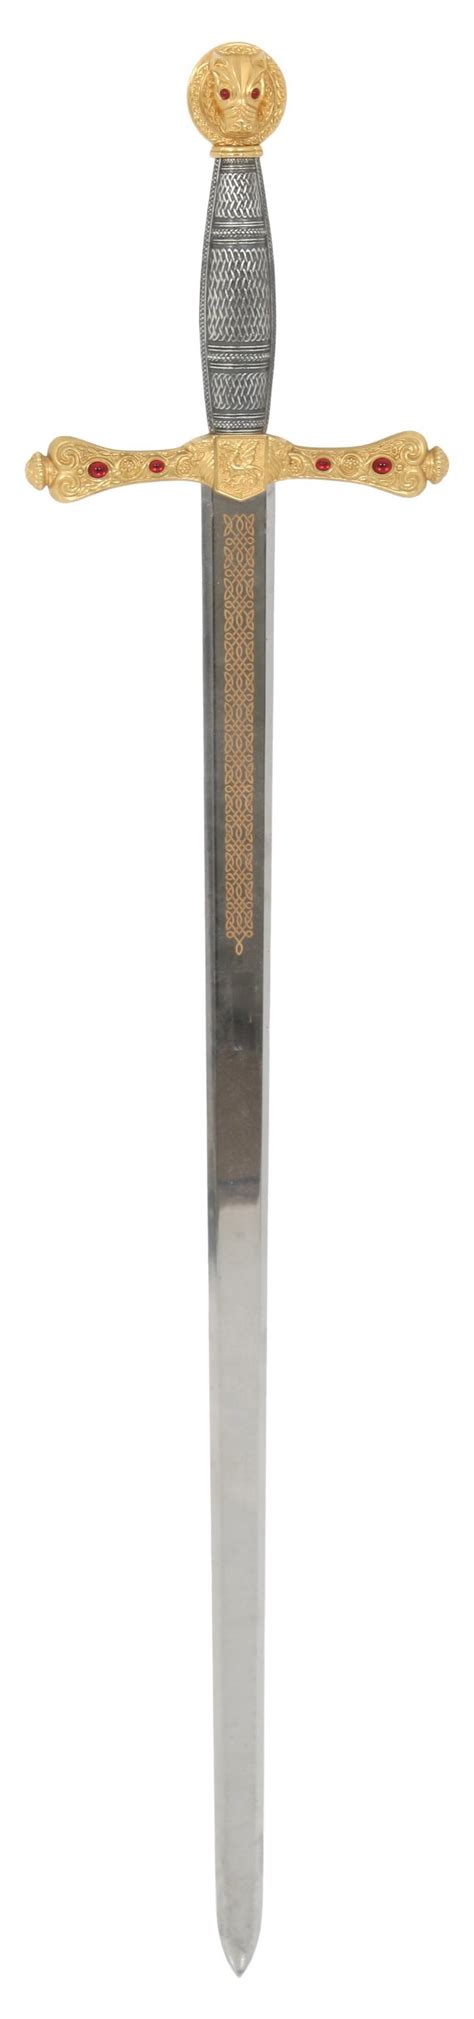 Lot - King Arthur's Excalibur Sword